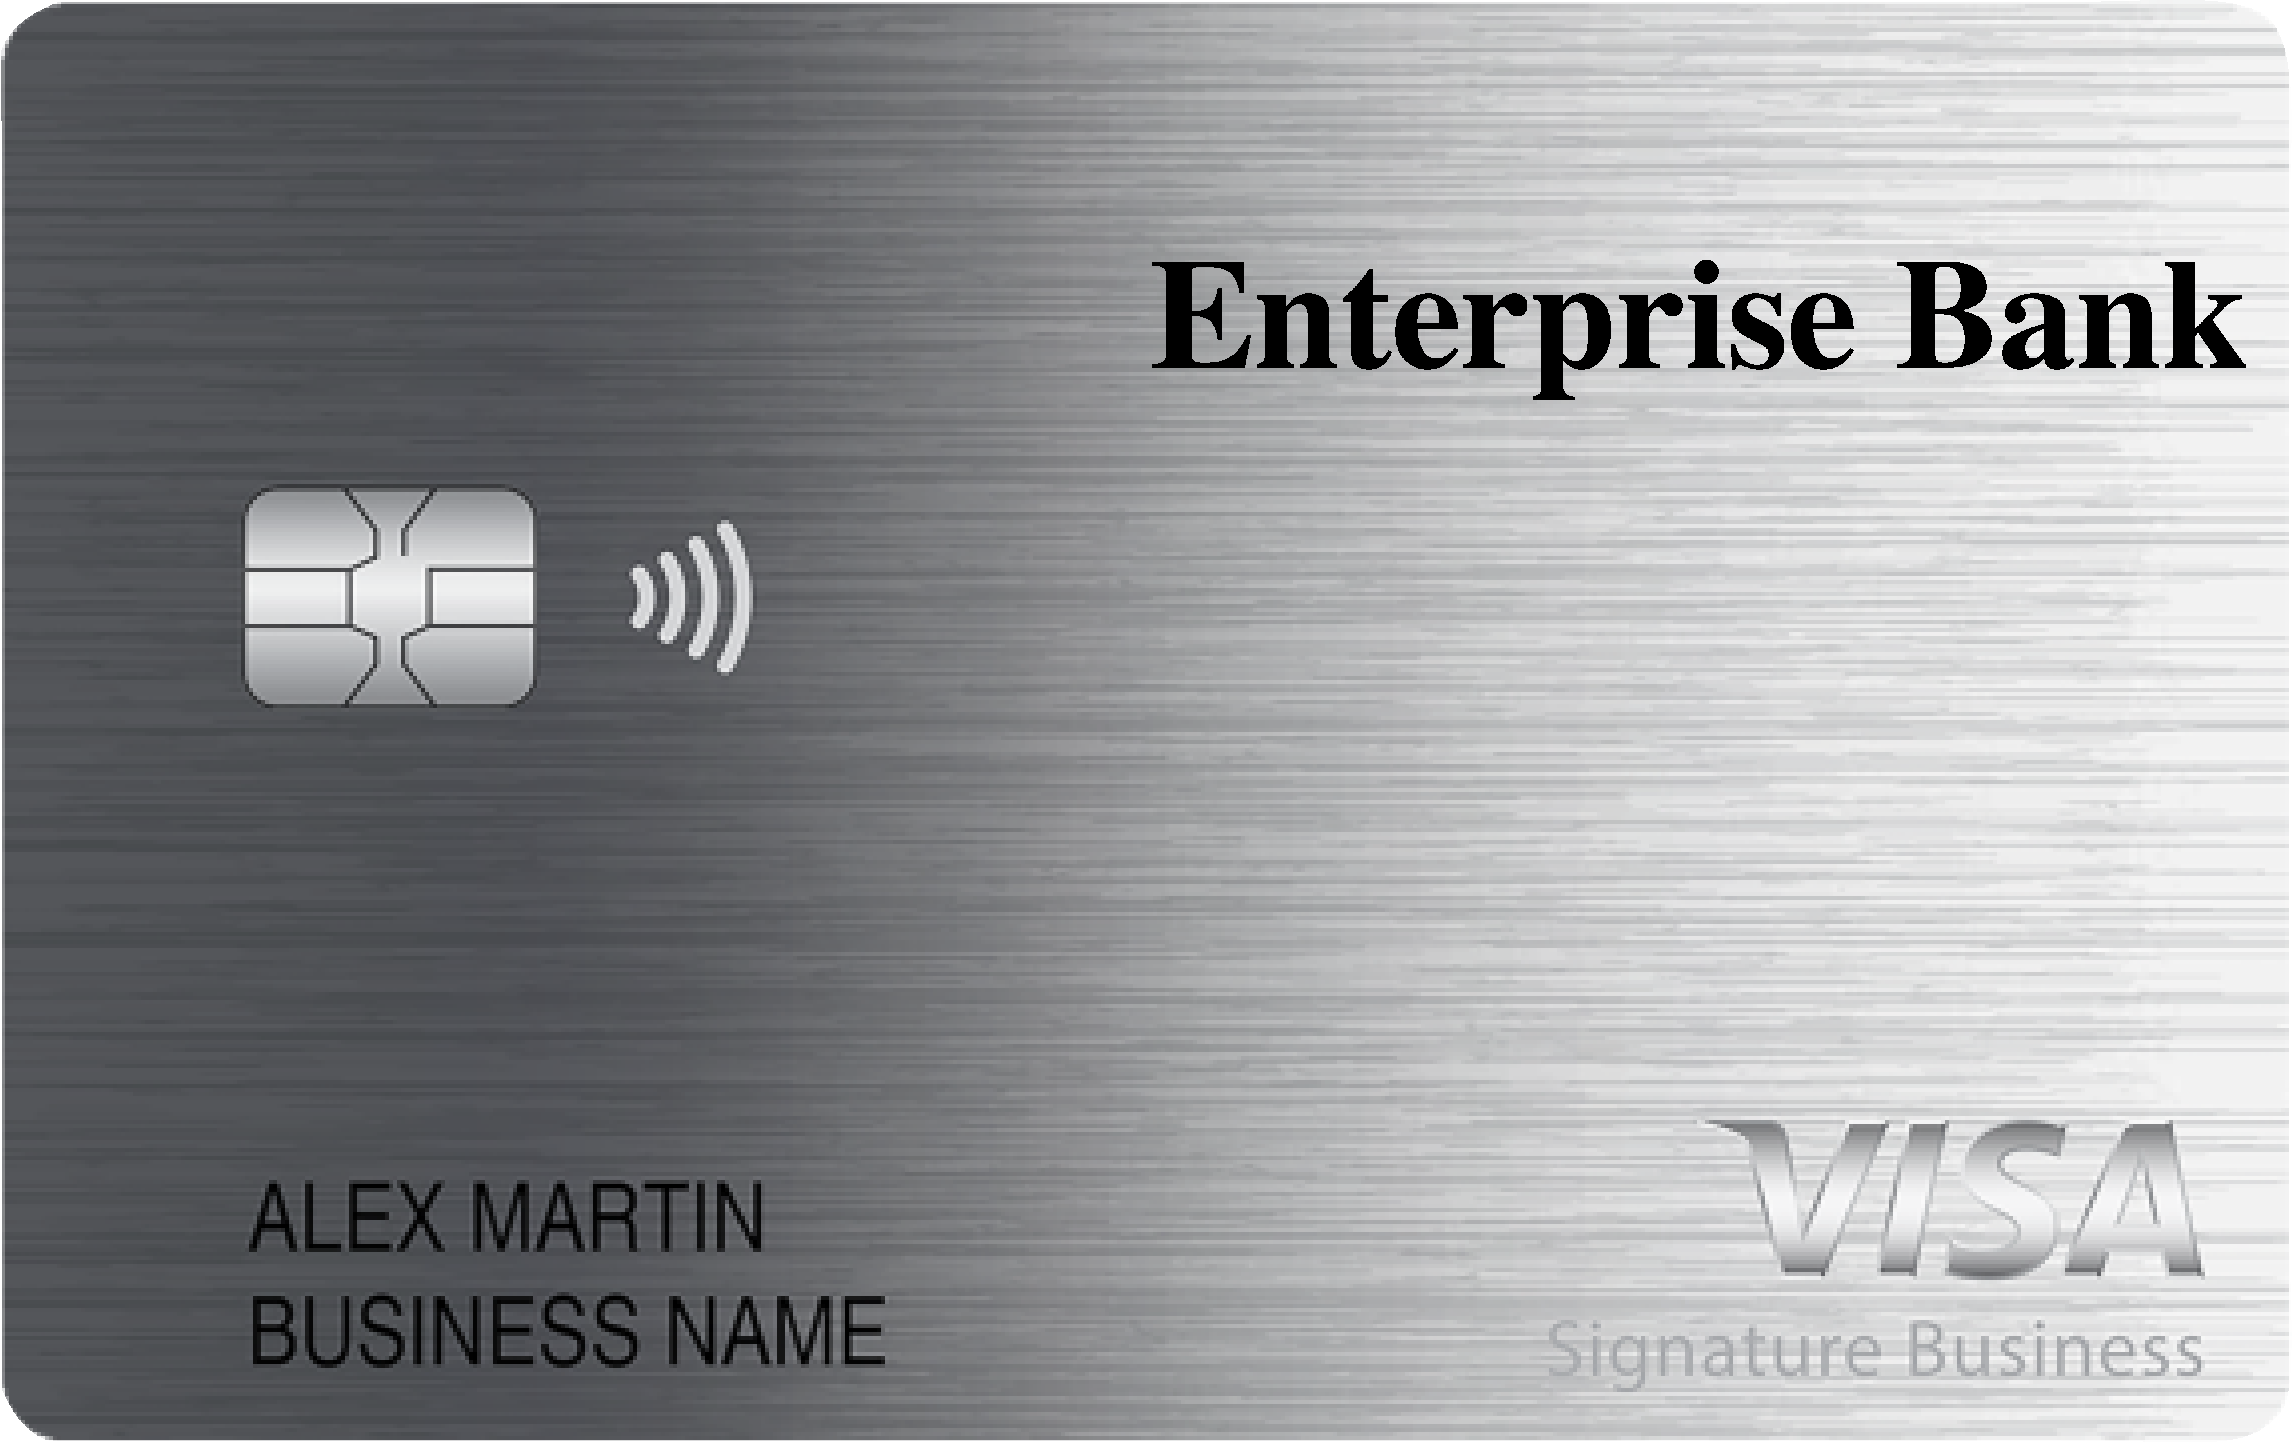 Enterprise Bank Smart Business Rewards Card